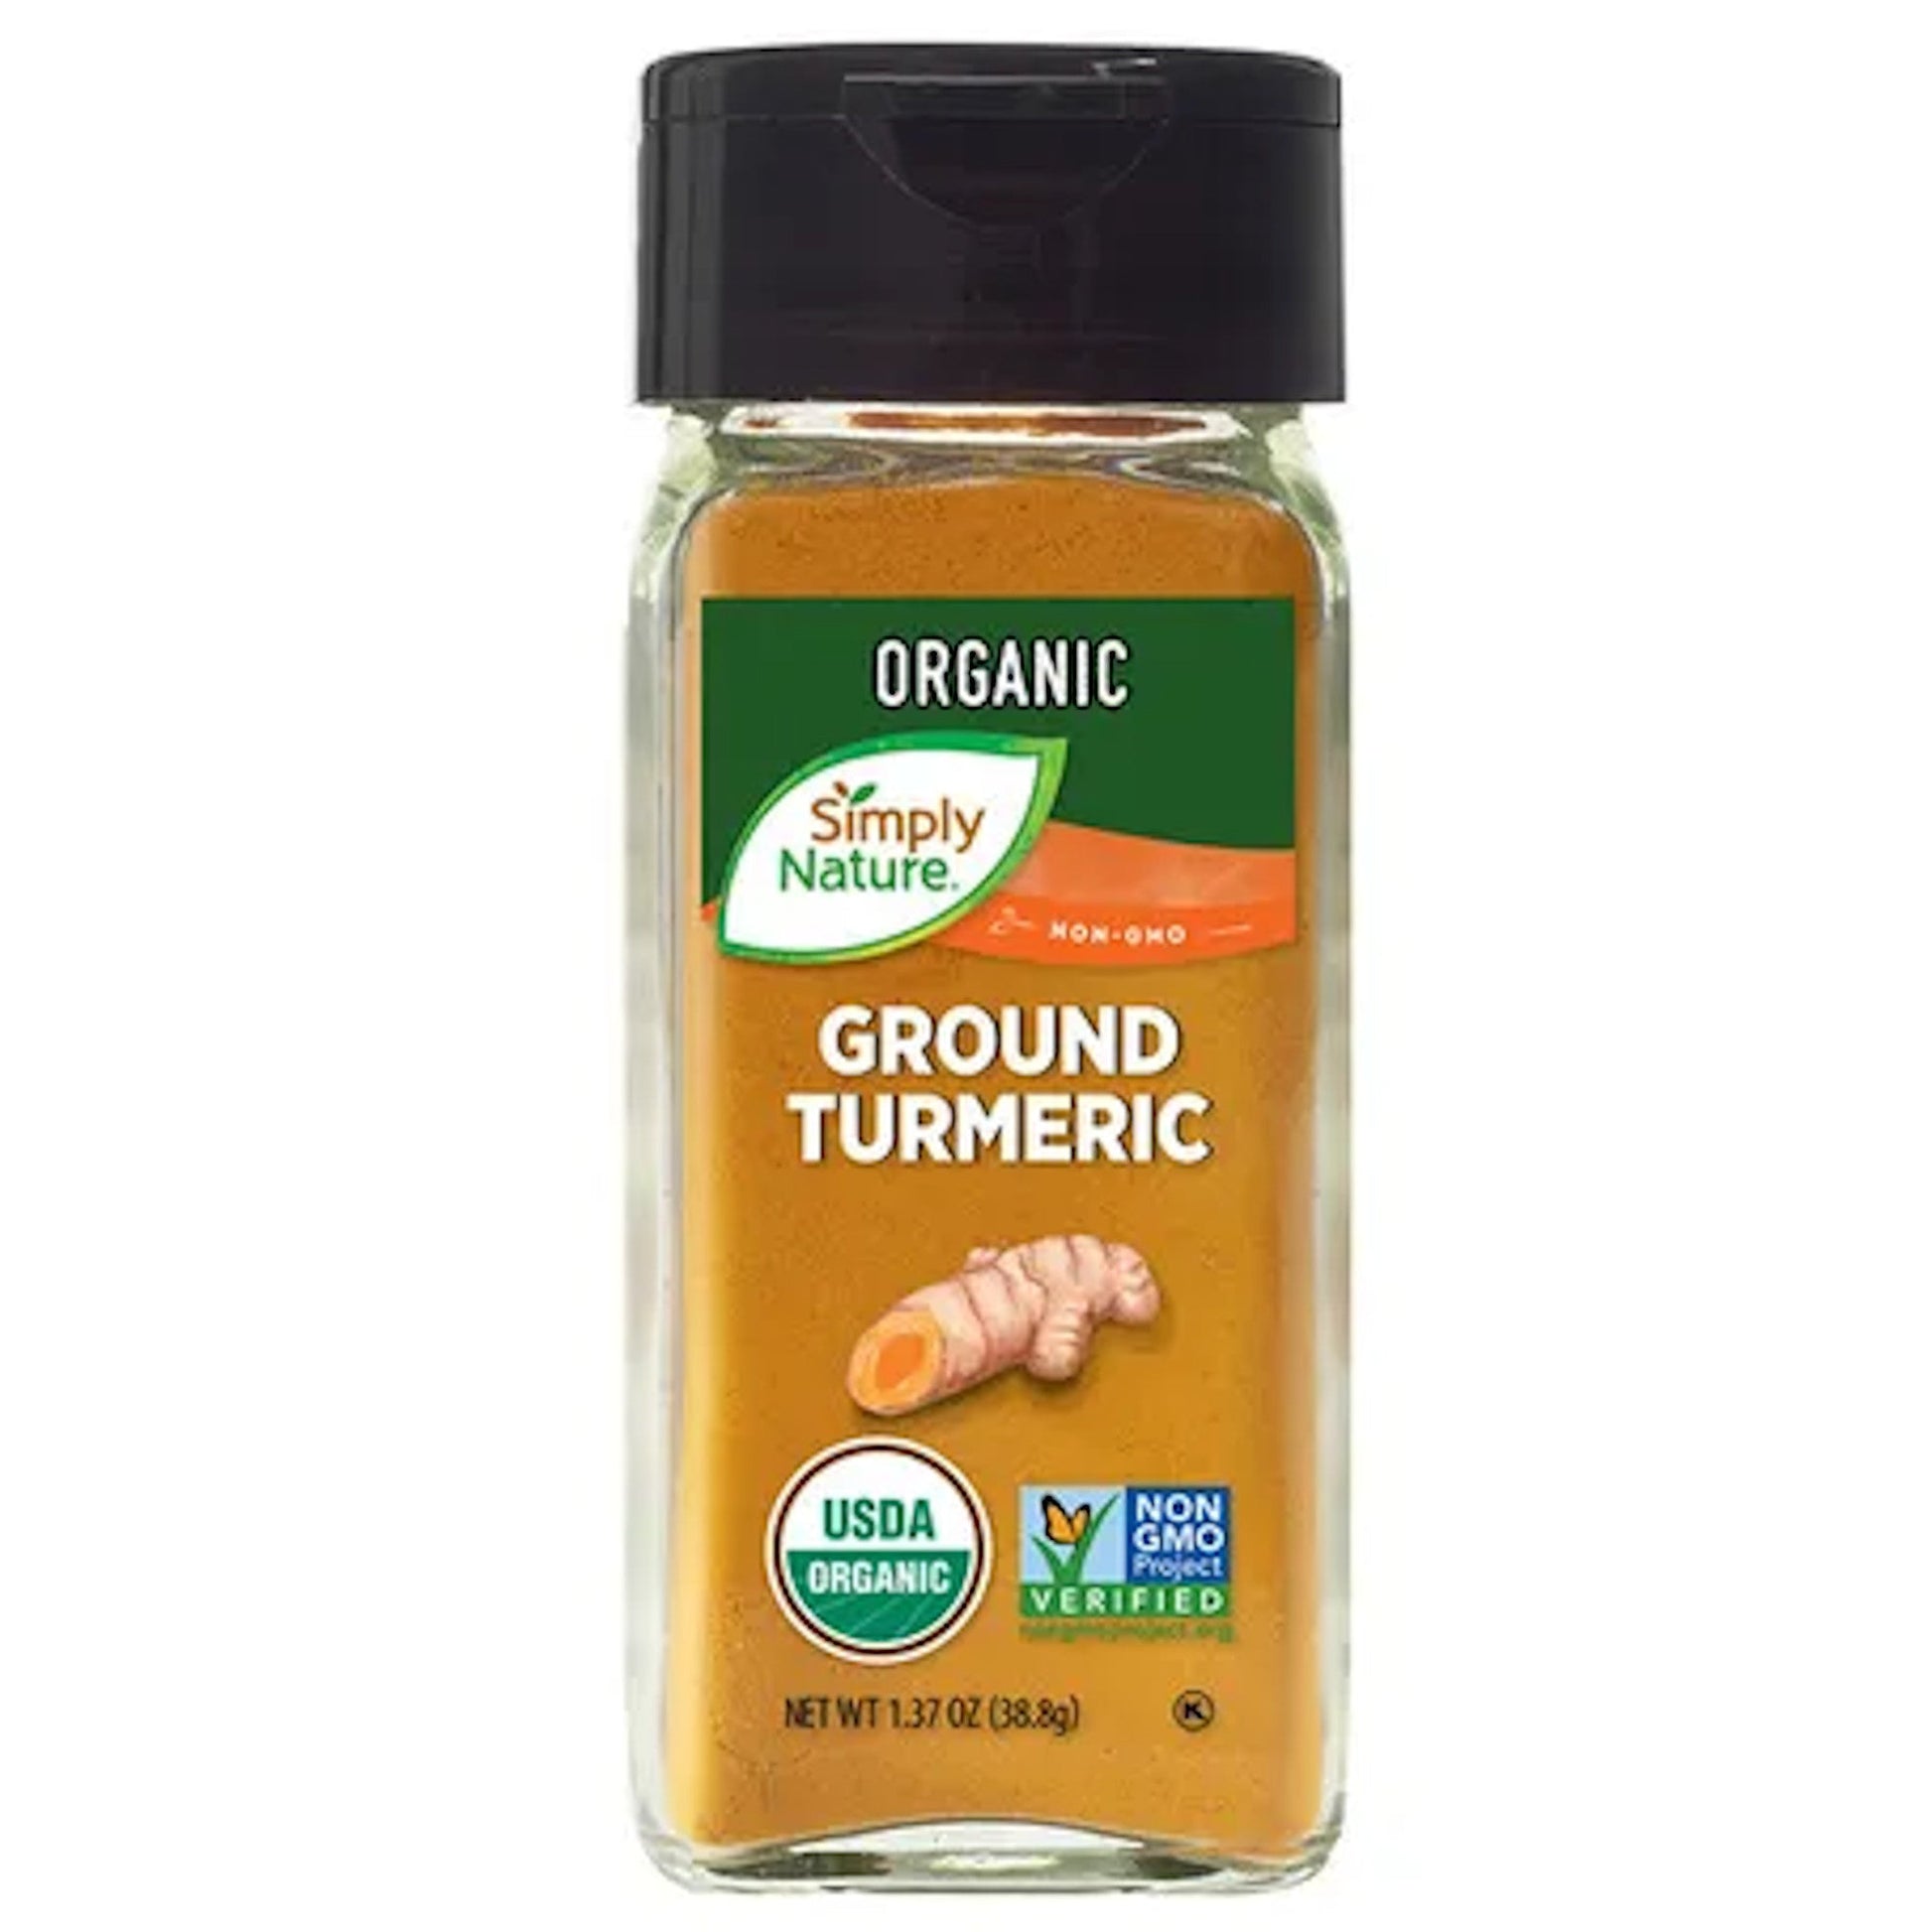 Simply Nature Organic Ground Turmeric 1.37 oz - FlavorKicker.com